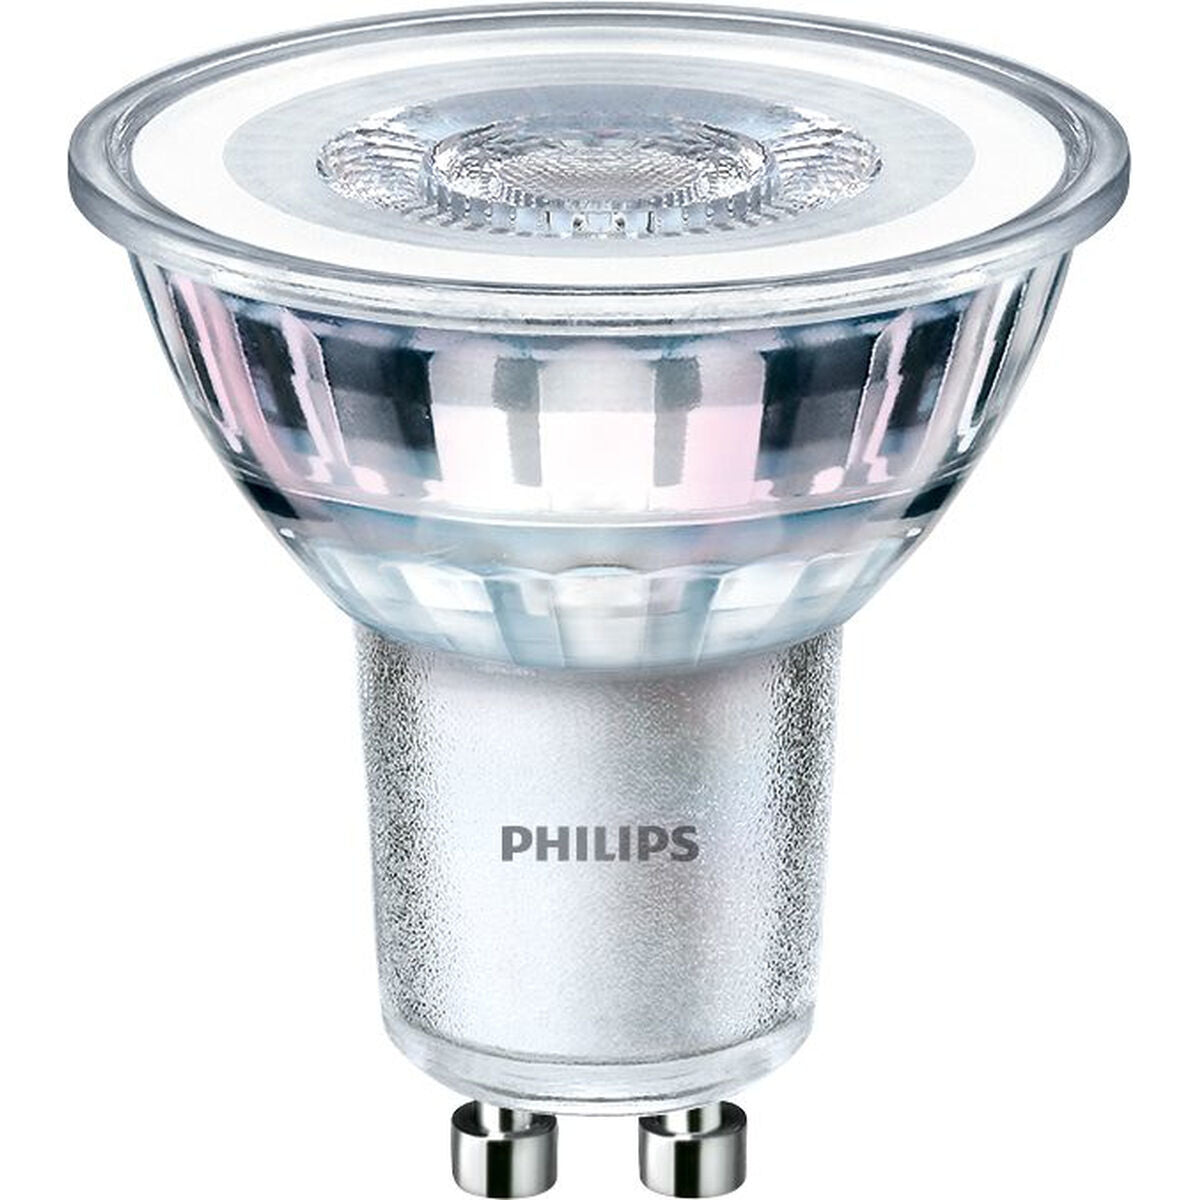 LED lamp Philips F 4,6 W GU10 390 lm 5 x 5,4 cm (2700 K)